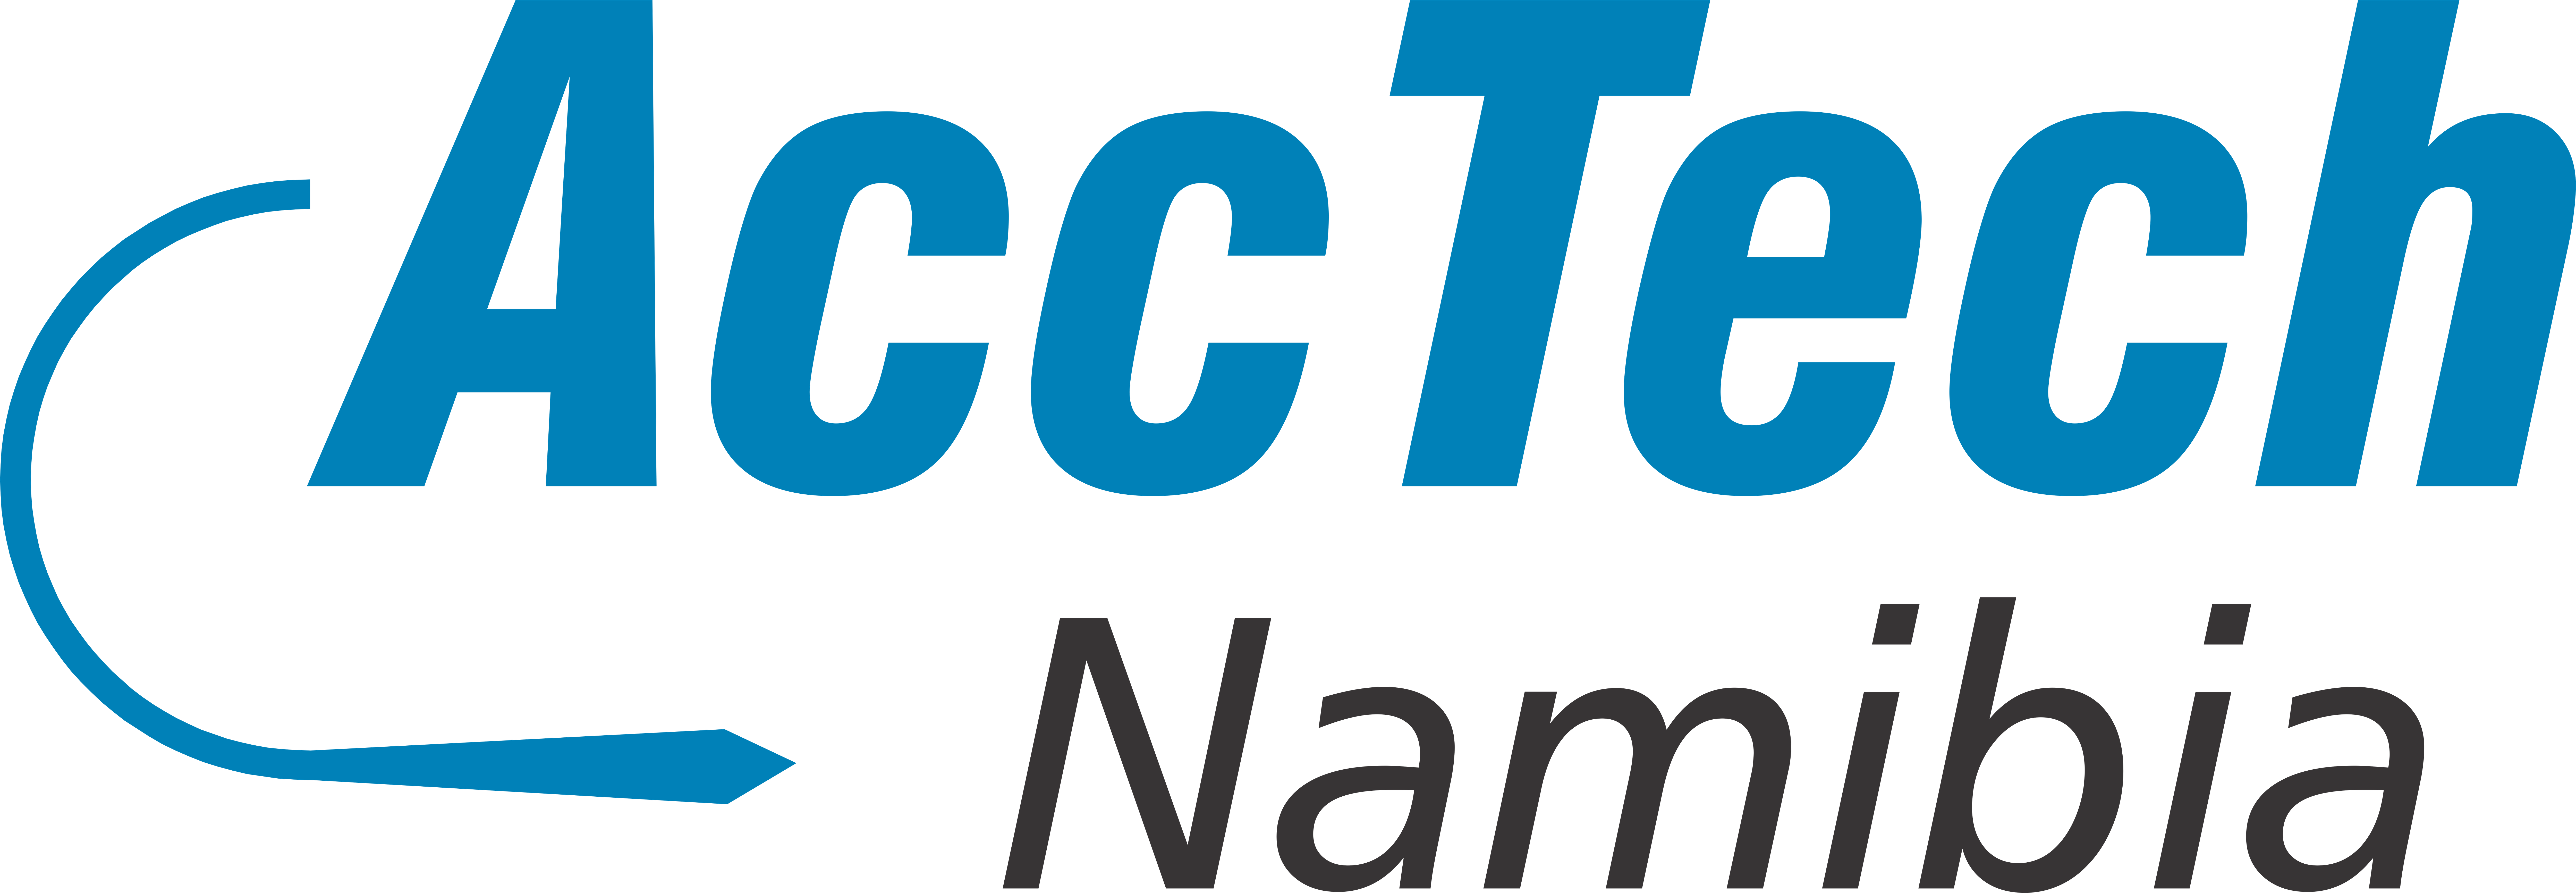 AccTech Namibia